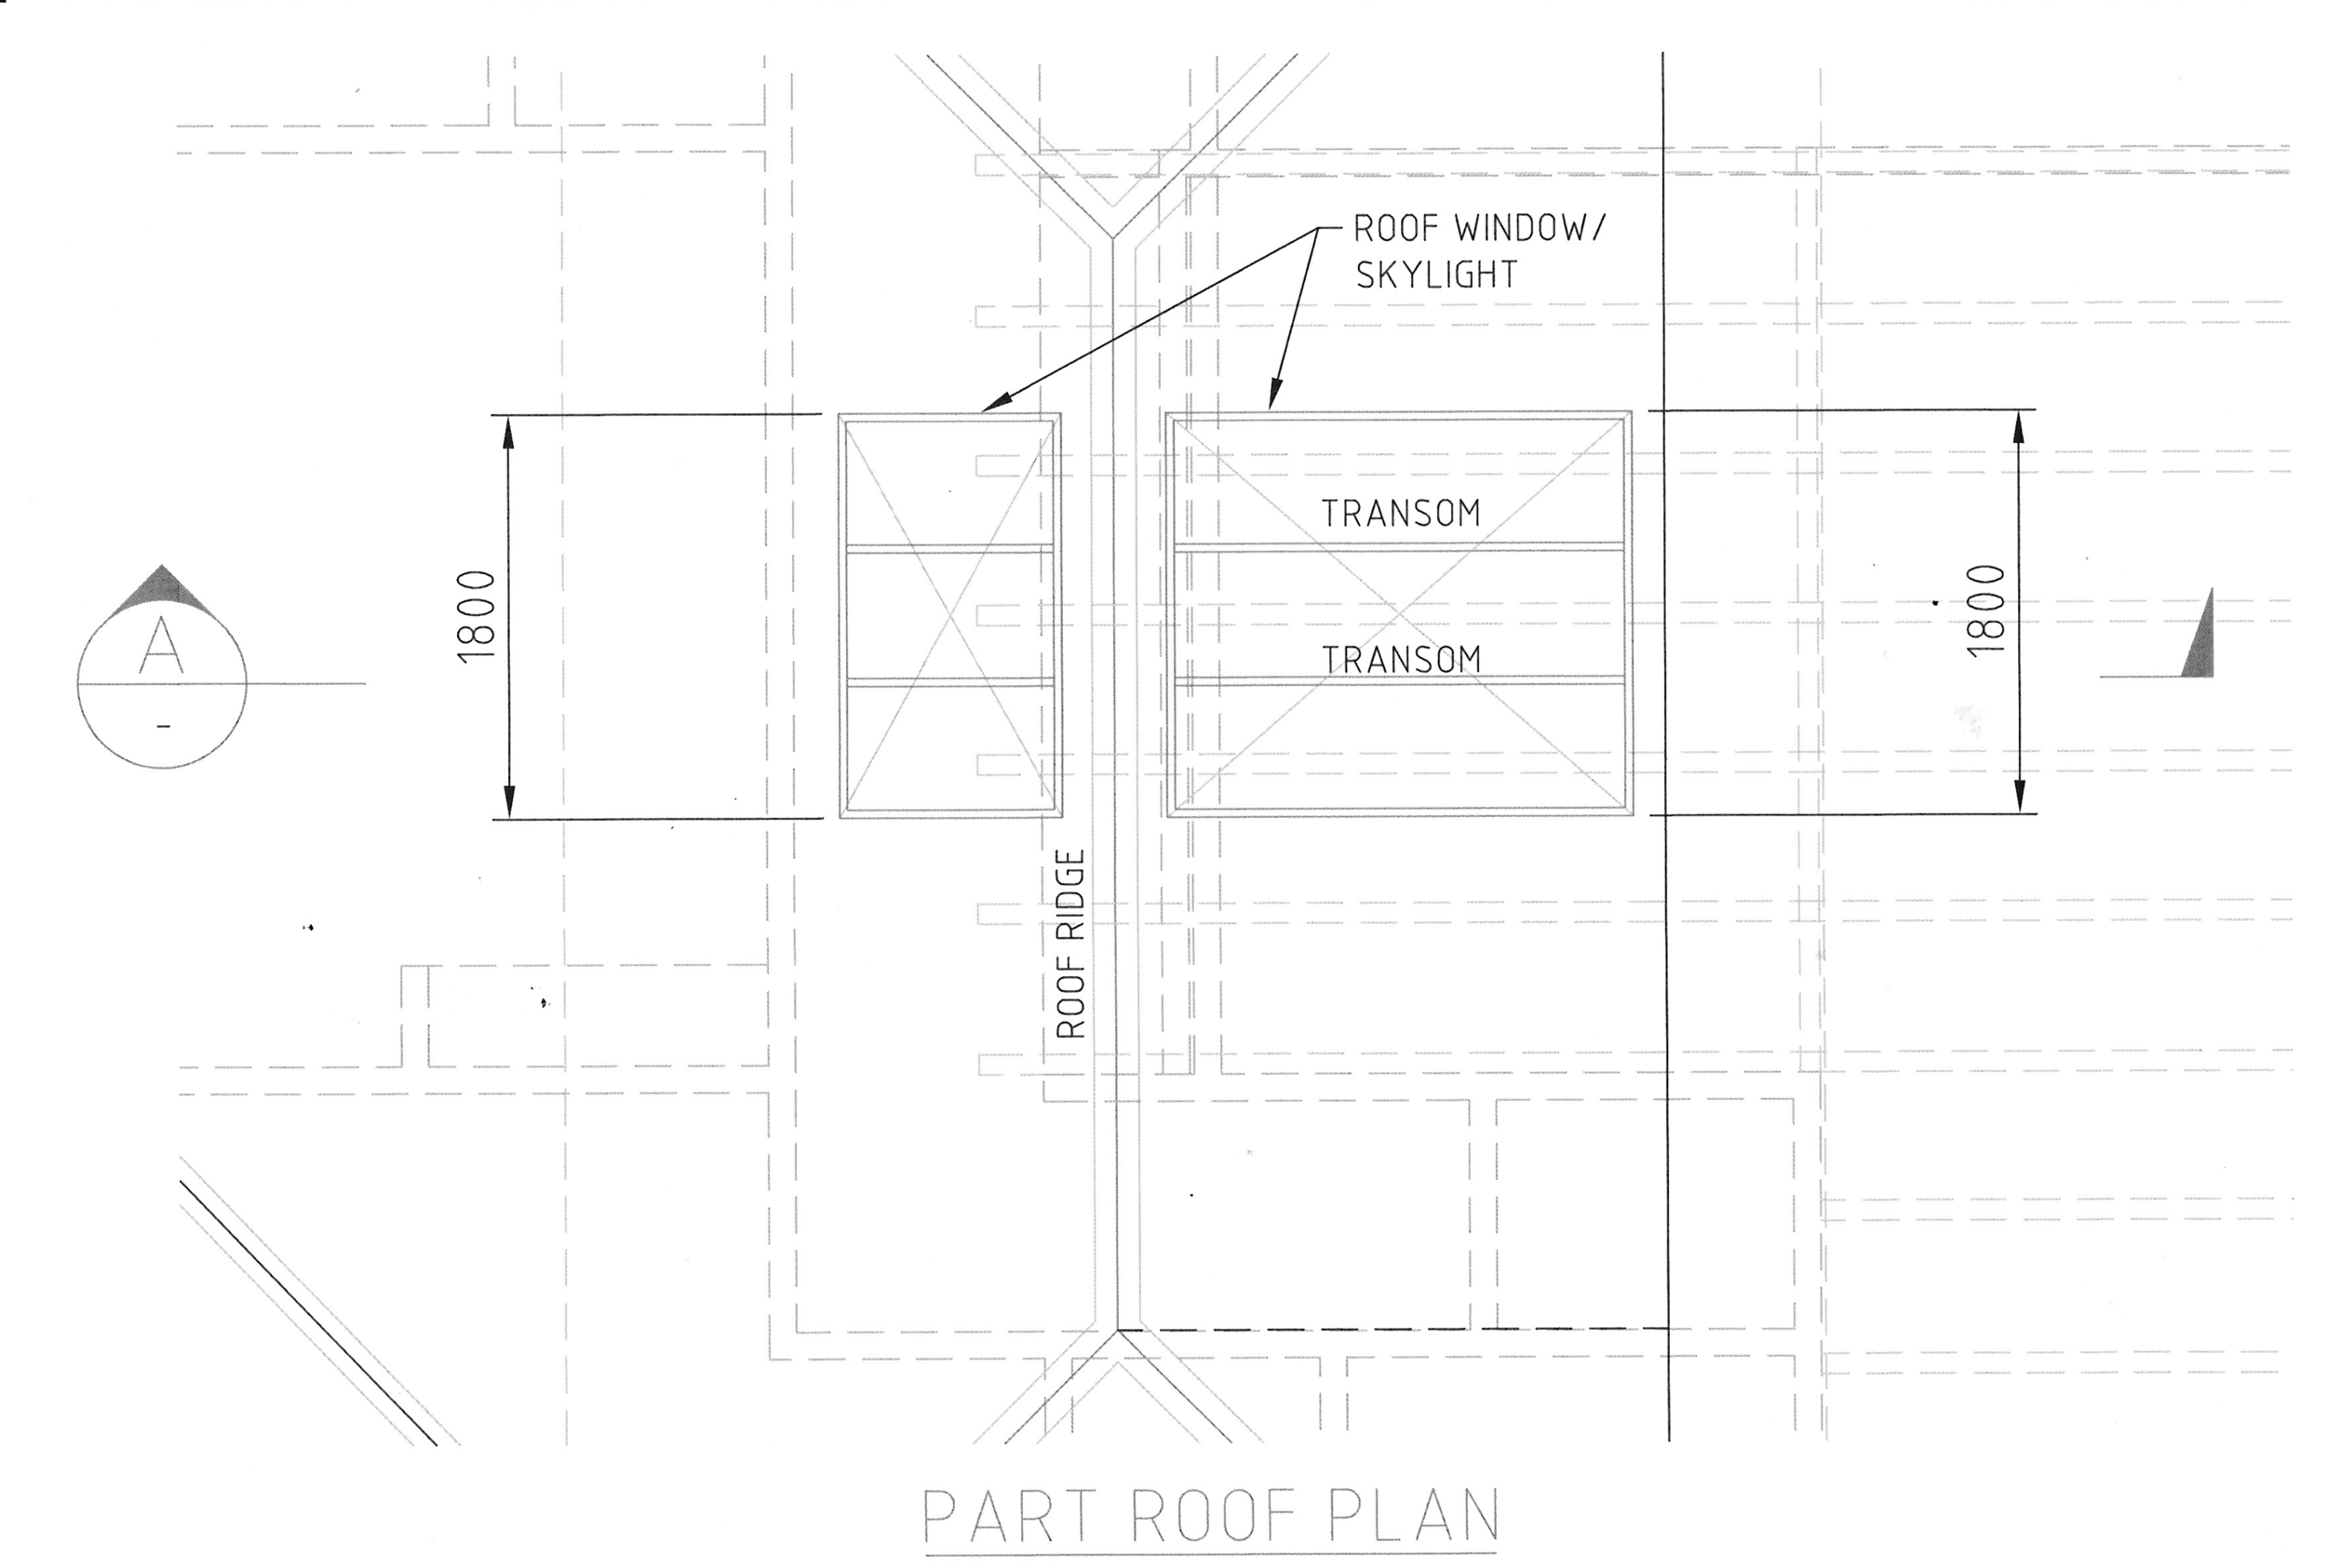 Plans provided pre-renovation